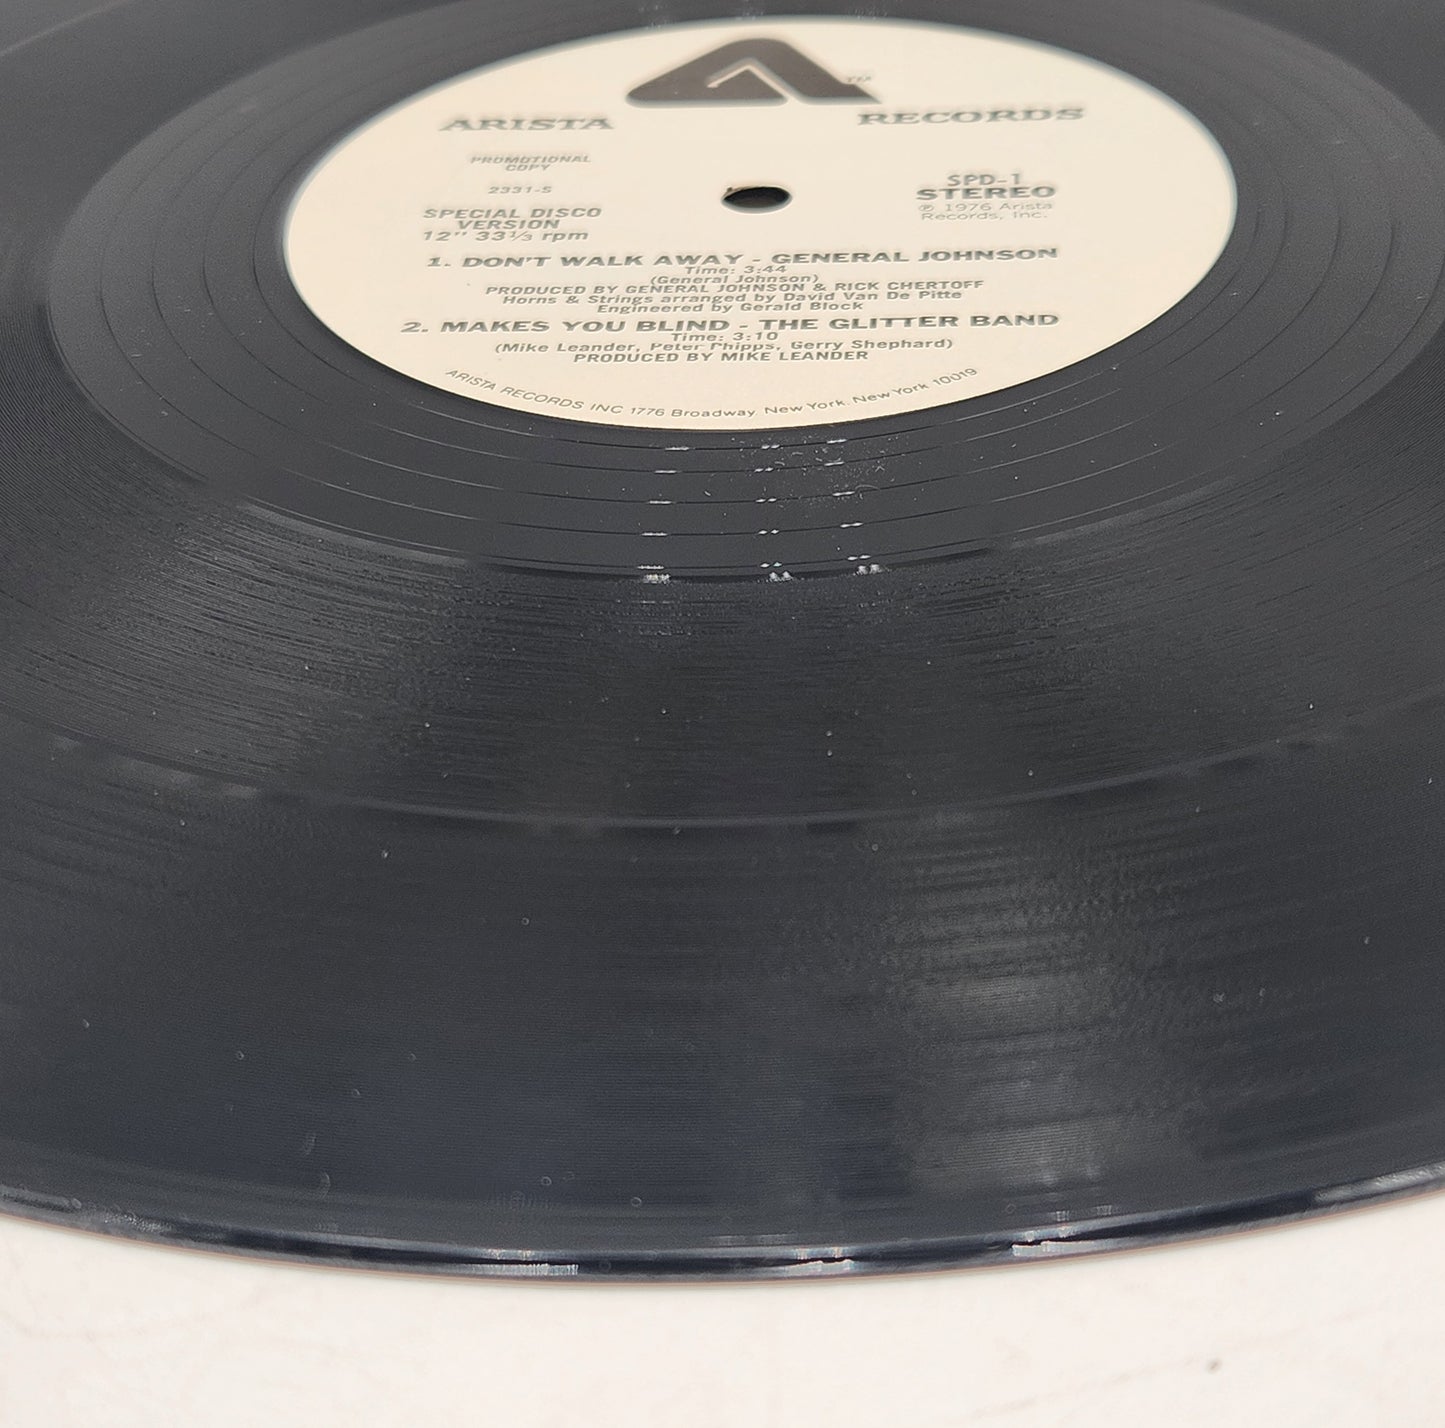 Gil Scott-Heron 1976 Jazz Funk Disco DJ Promo 12" Single